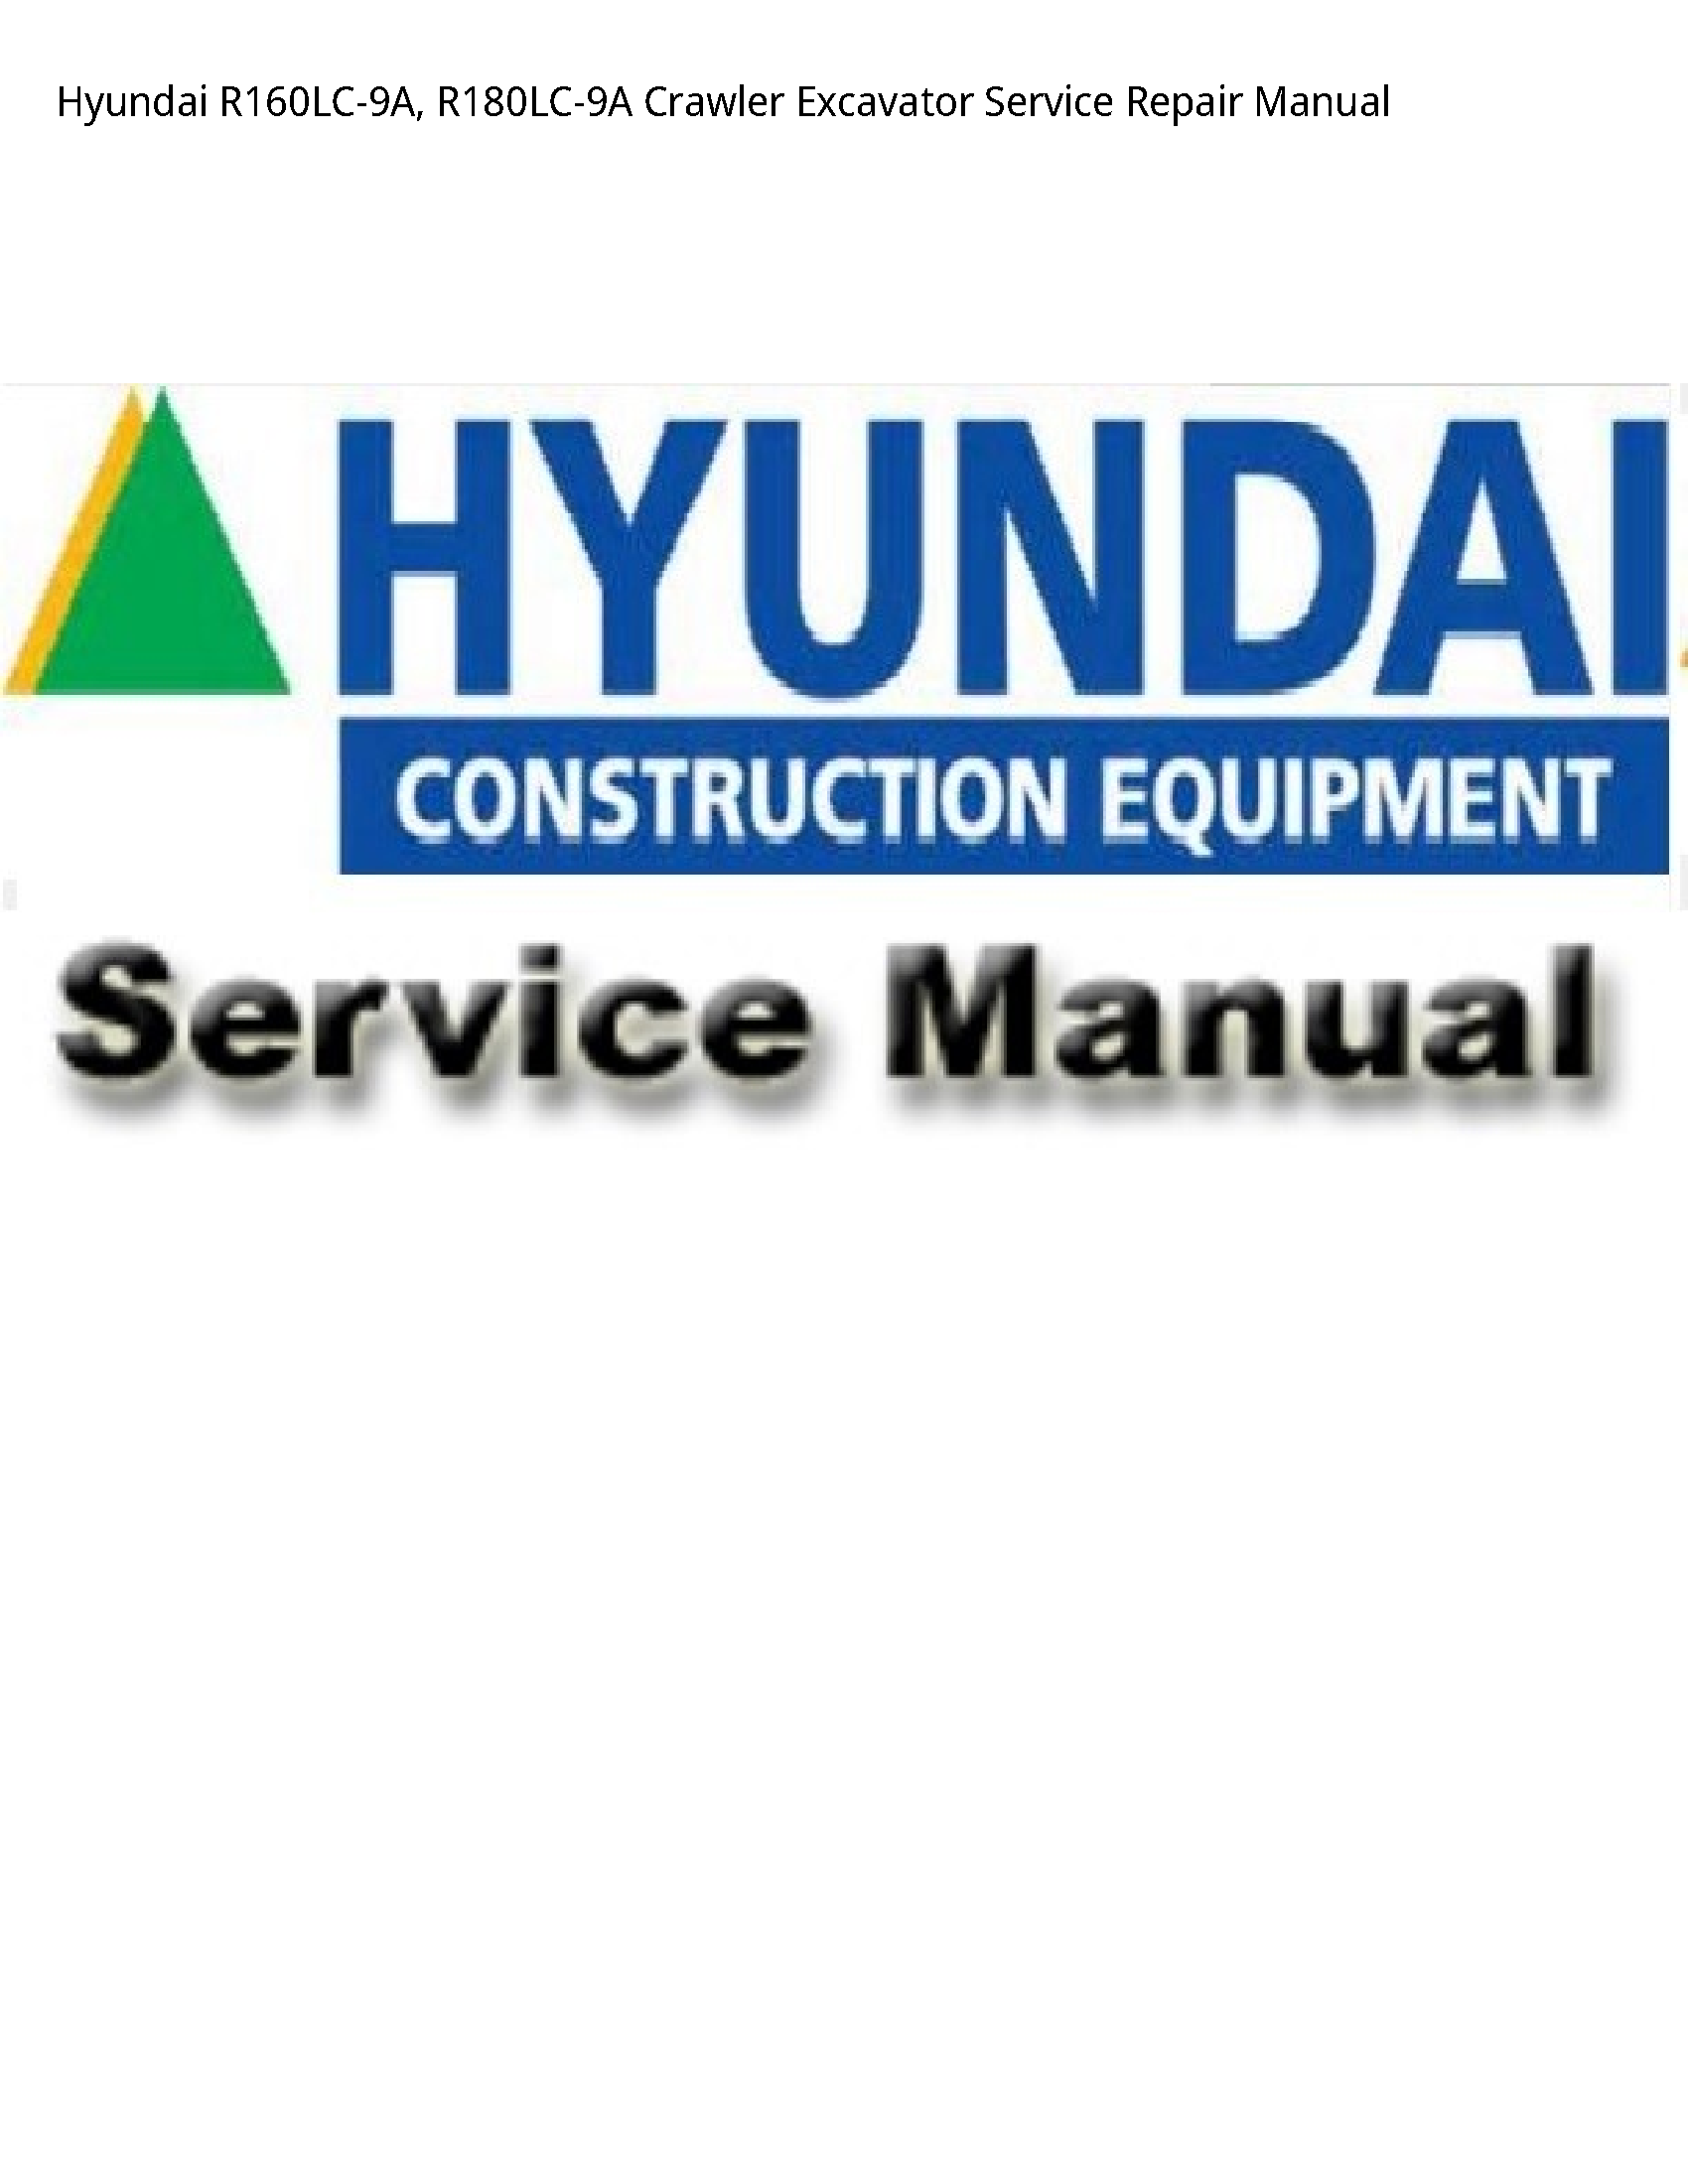 Hyundai R160LC-9A Crawler Excavator manual